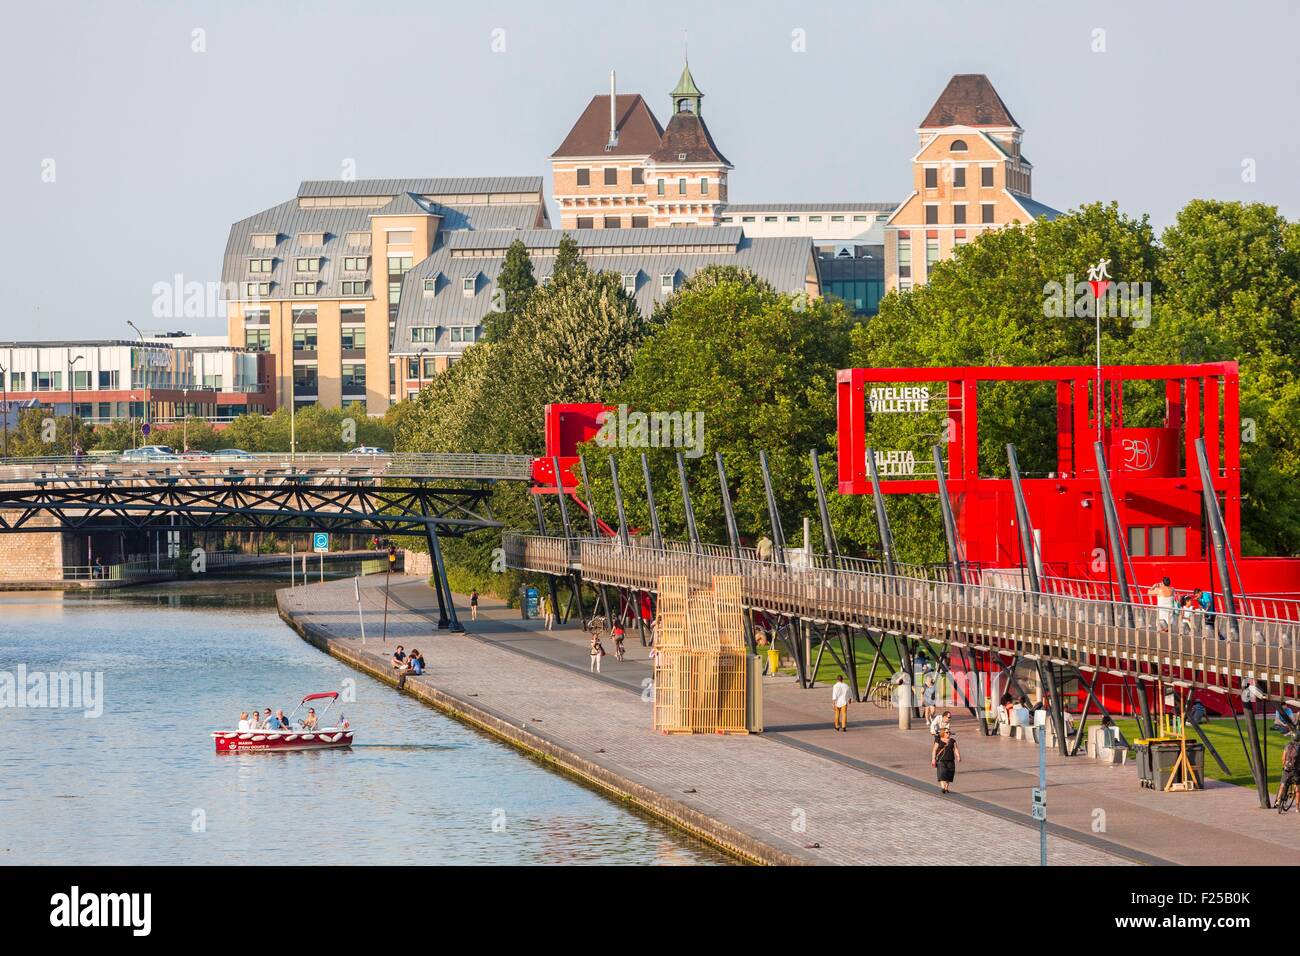 France, Paris, the Parc de la Villette, designed by architect Bernard Tschumi in 1983, the Ourcq canal, red buildings called Folies Stock Photo